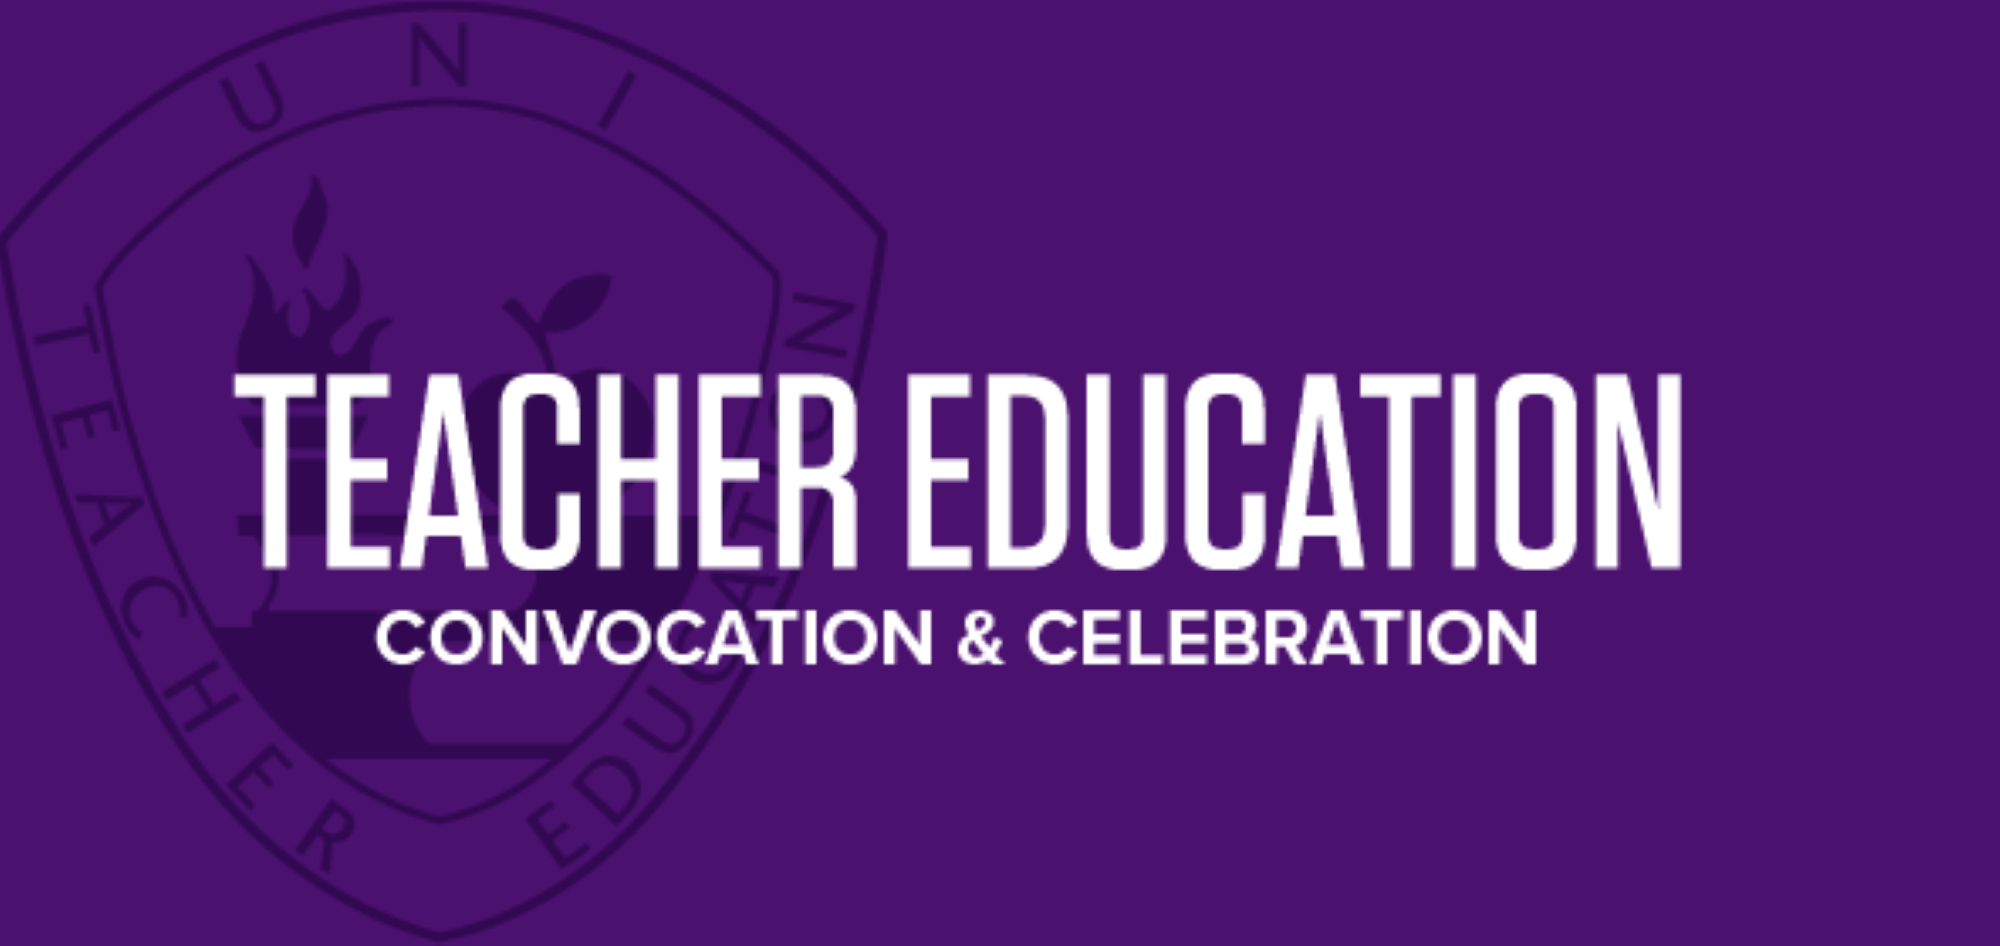 Teacher education convocation 